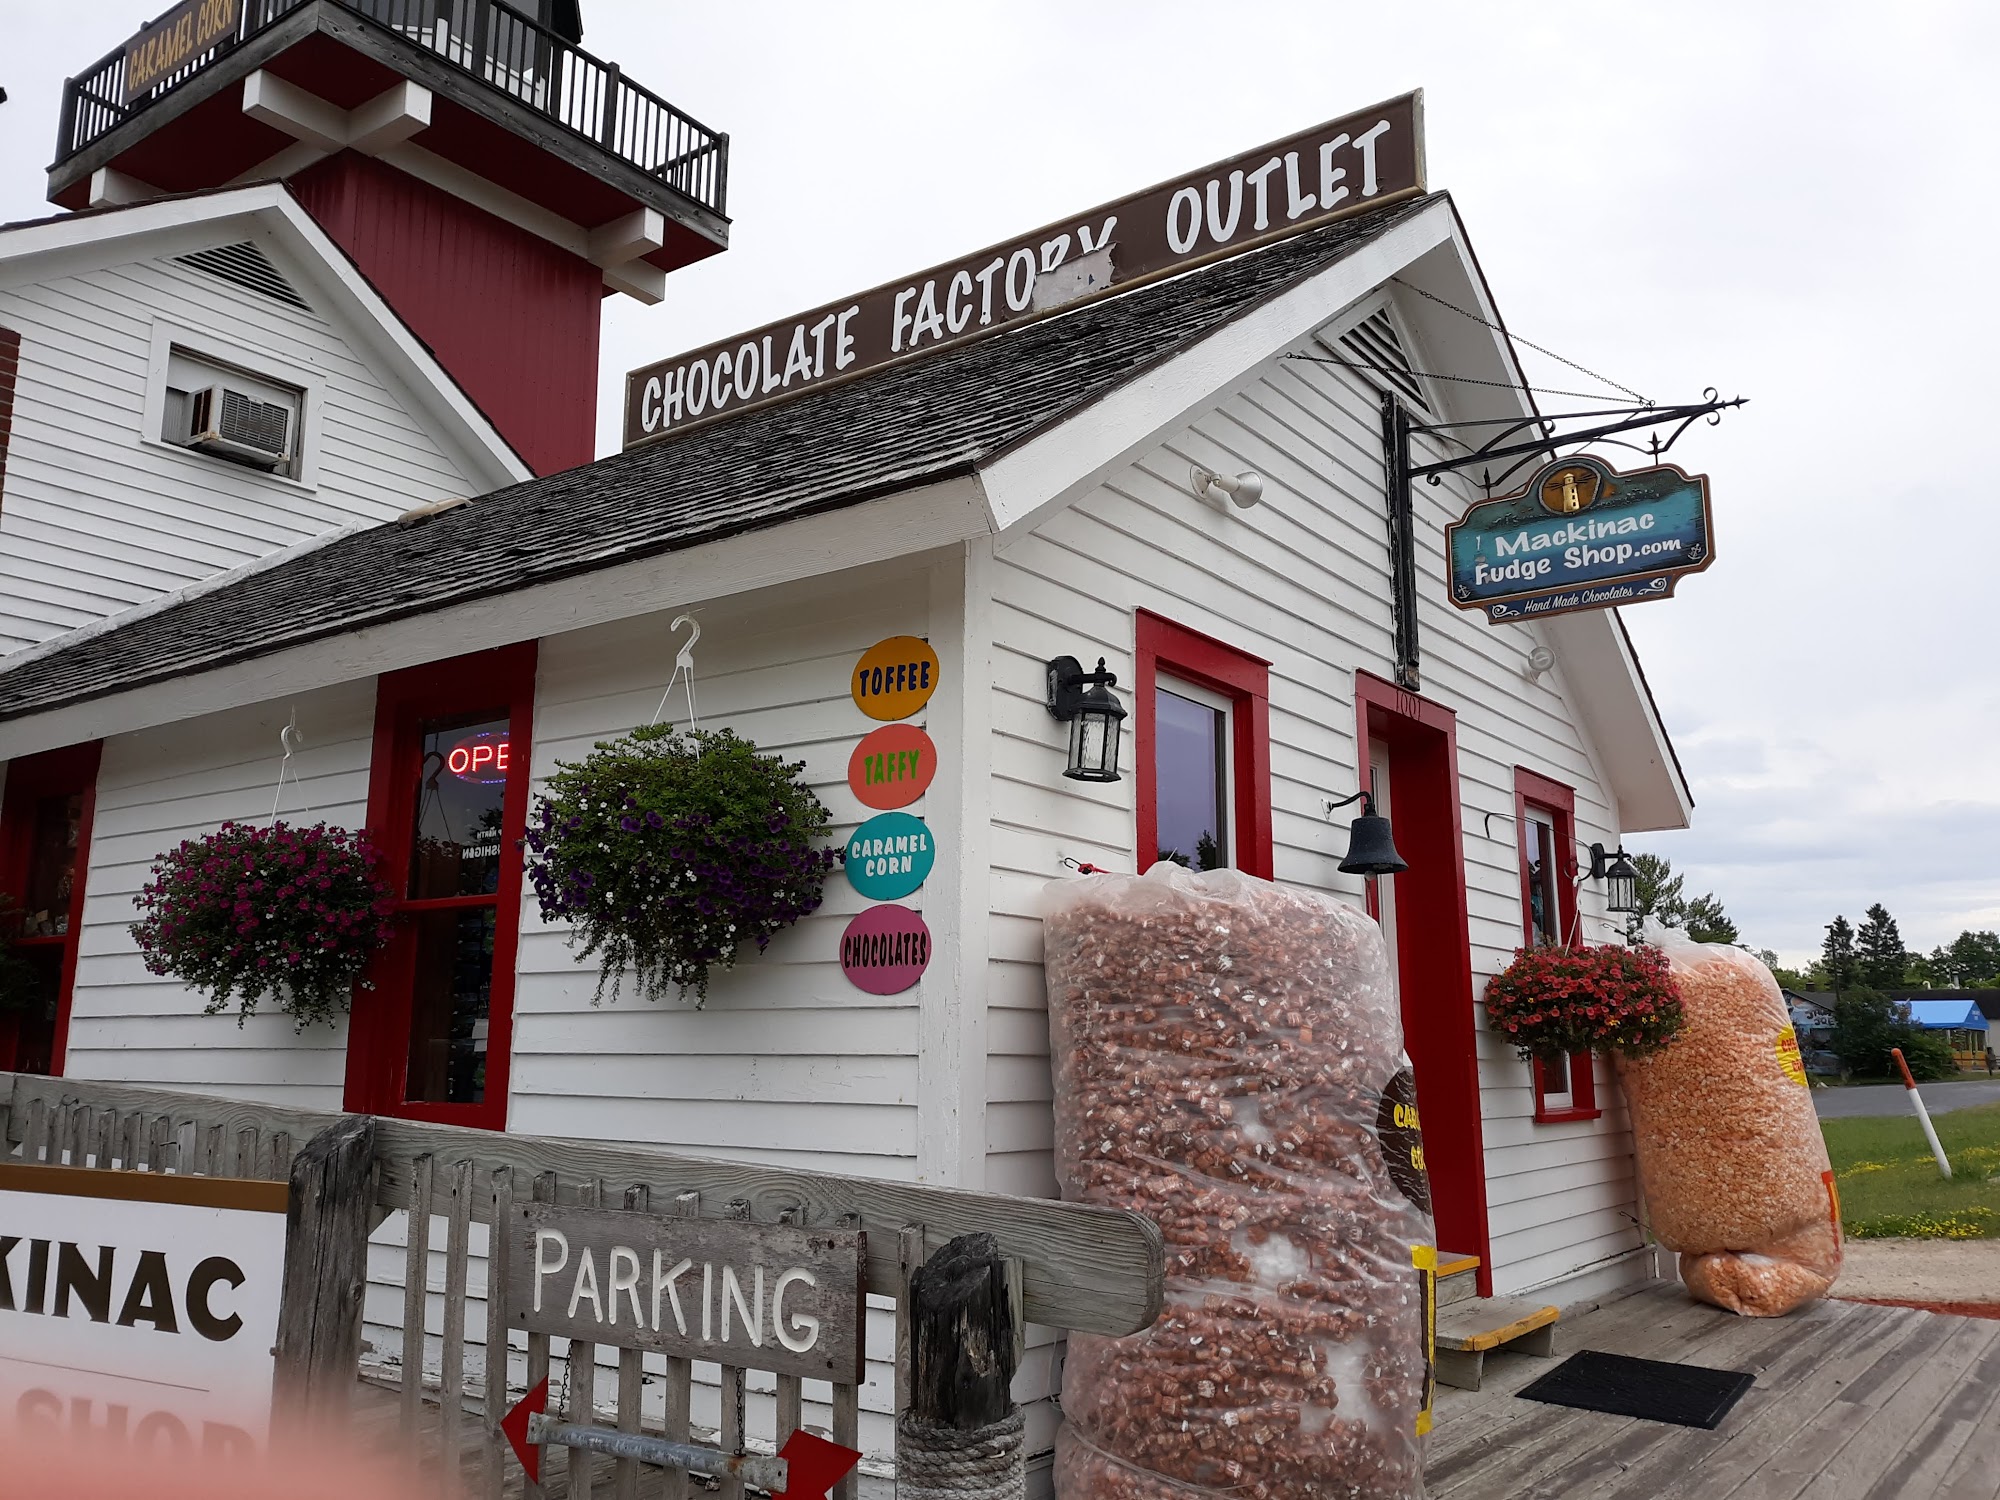 Mackinac Fudge Shop